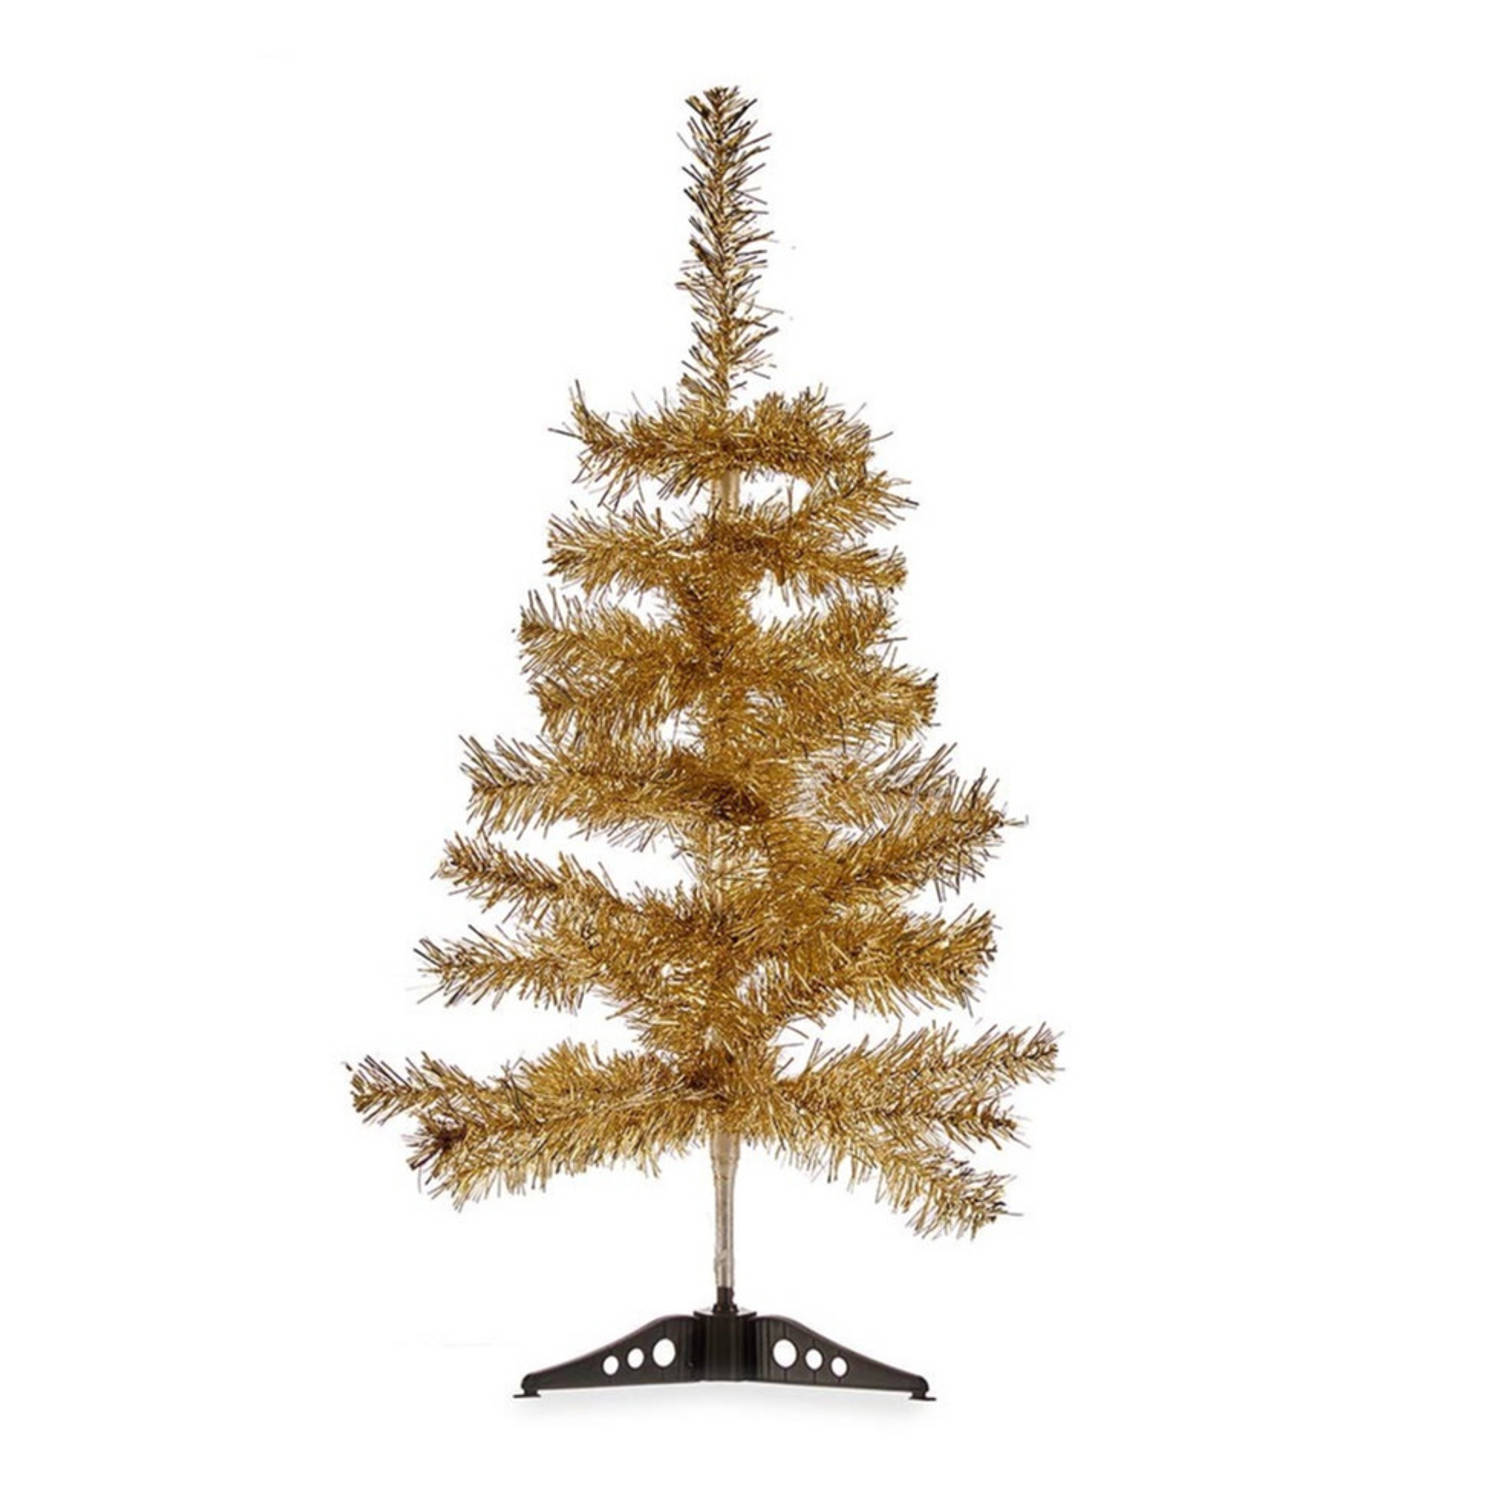 Krist+ kunstboom/kunst kerstboom - klein - brons - 60 cm - Kunstkerstboom